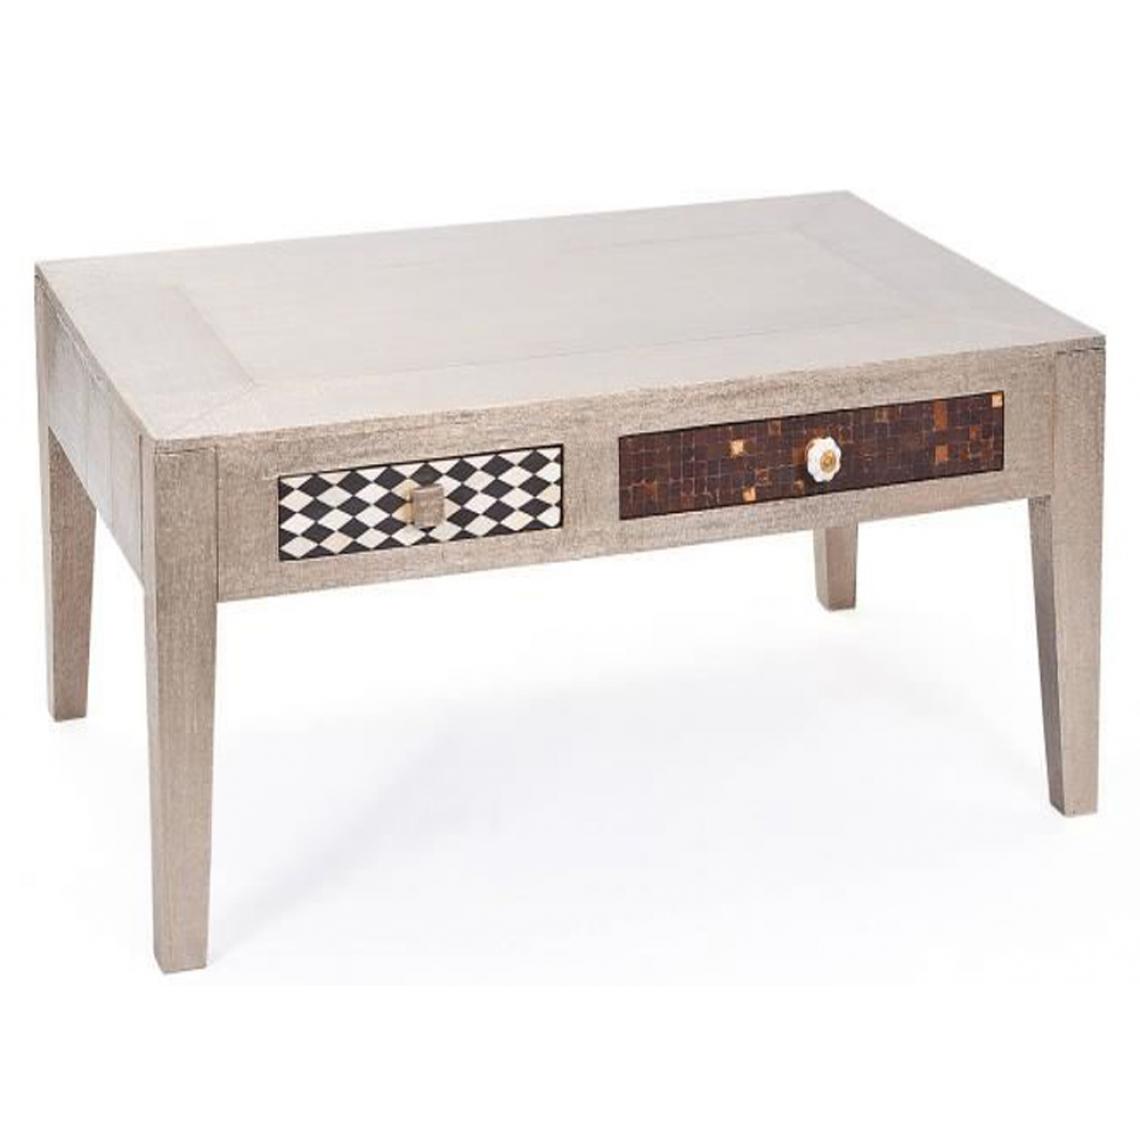 Pegane - Table basse avec 2 tiroirs - Dim : 110 x 70 x 45 cm - Tables basses